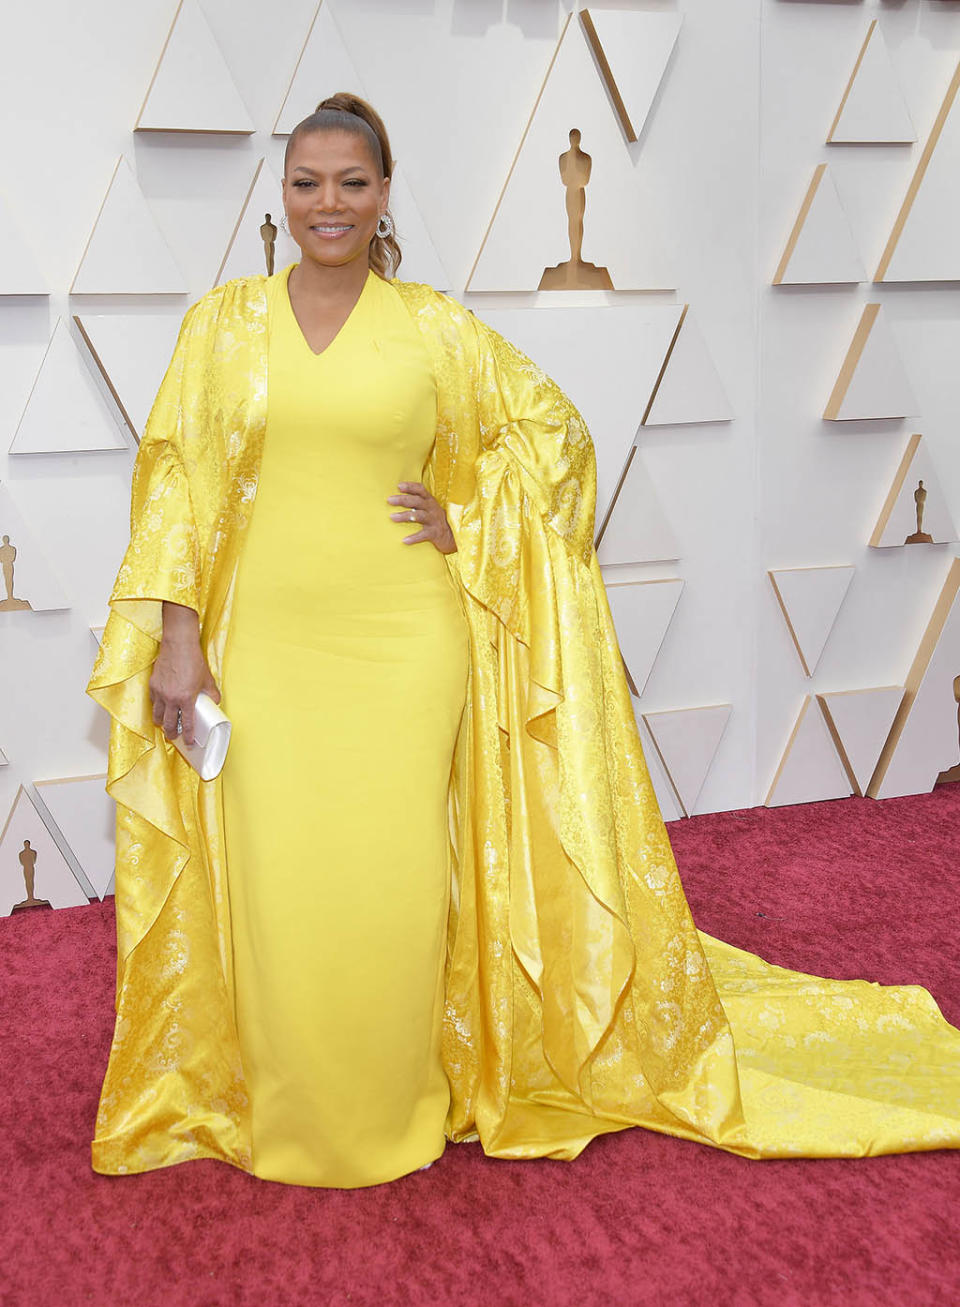 Queen Latifah Glows in Elegant Yellow Halter Dress & Sparkling Shawl at